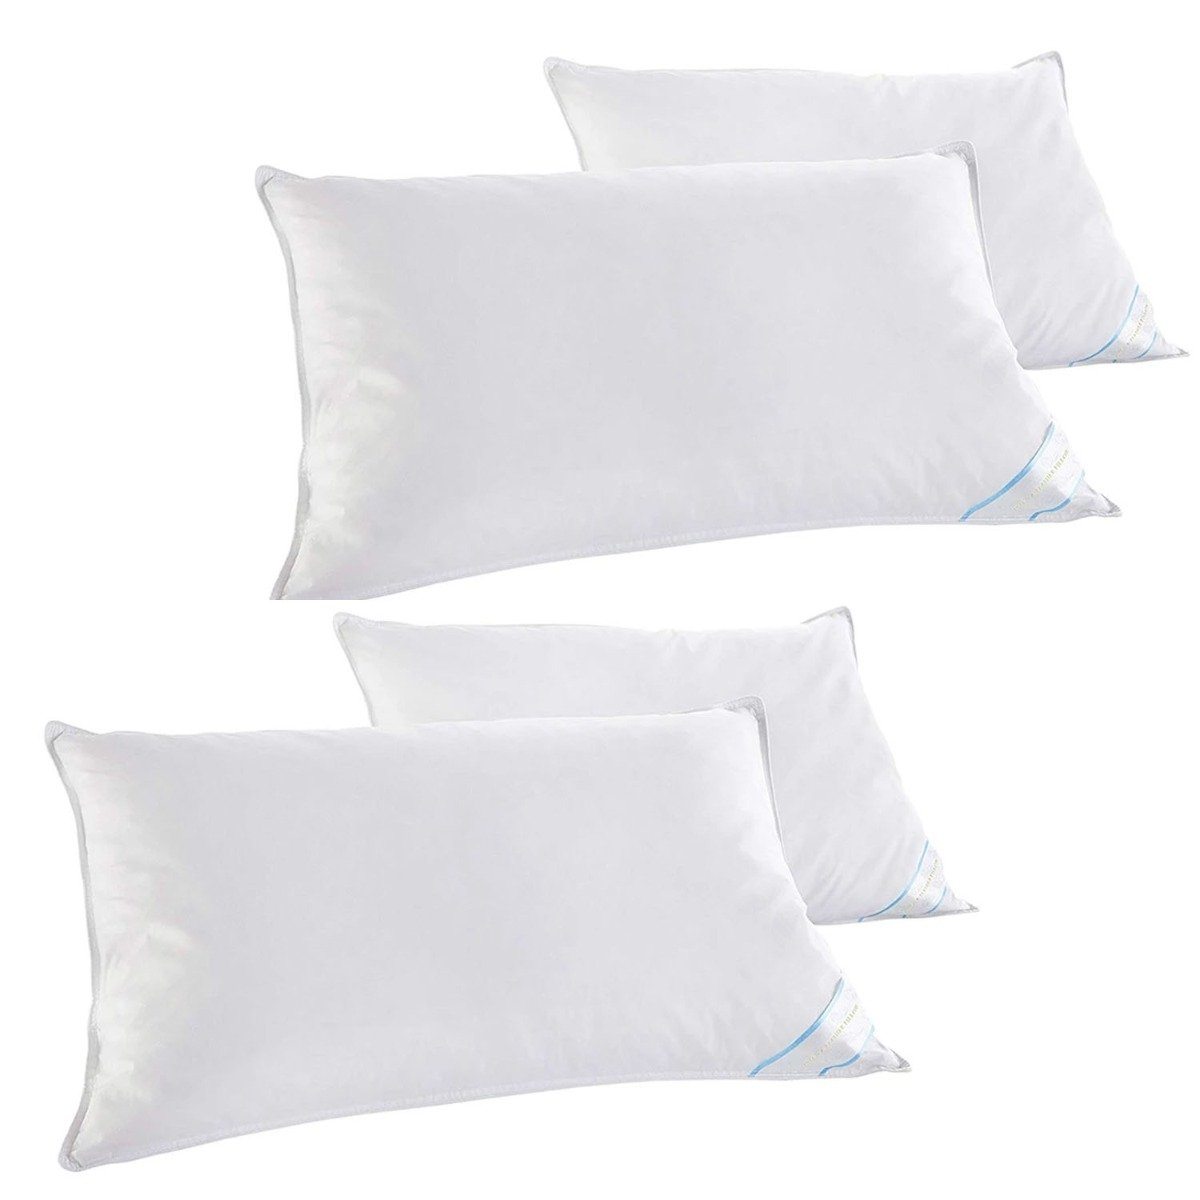 Beauty Sleep 100% Cotton-Covered Duck Feather Pillows / Standard/Queen